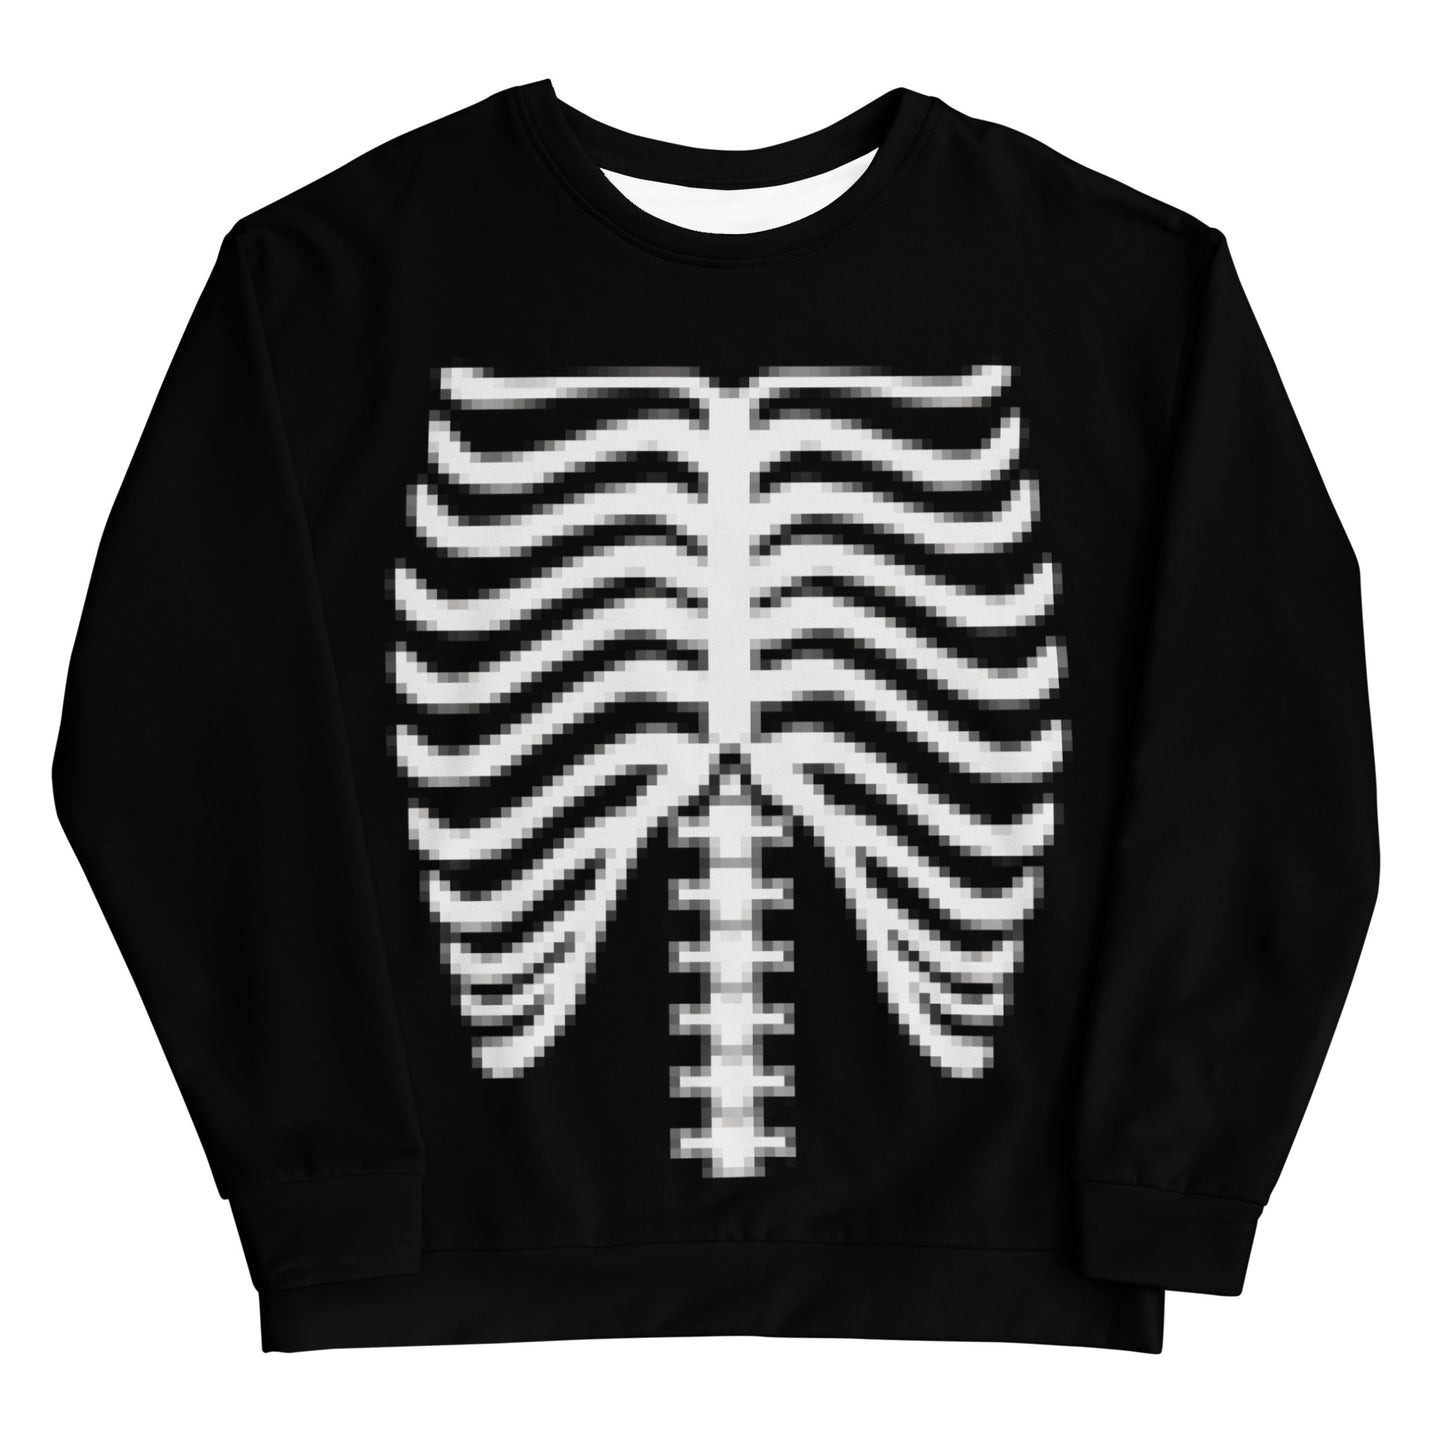 'Crypto Skeleton' Eco Friendly Unisex Sweatshirt